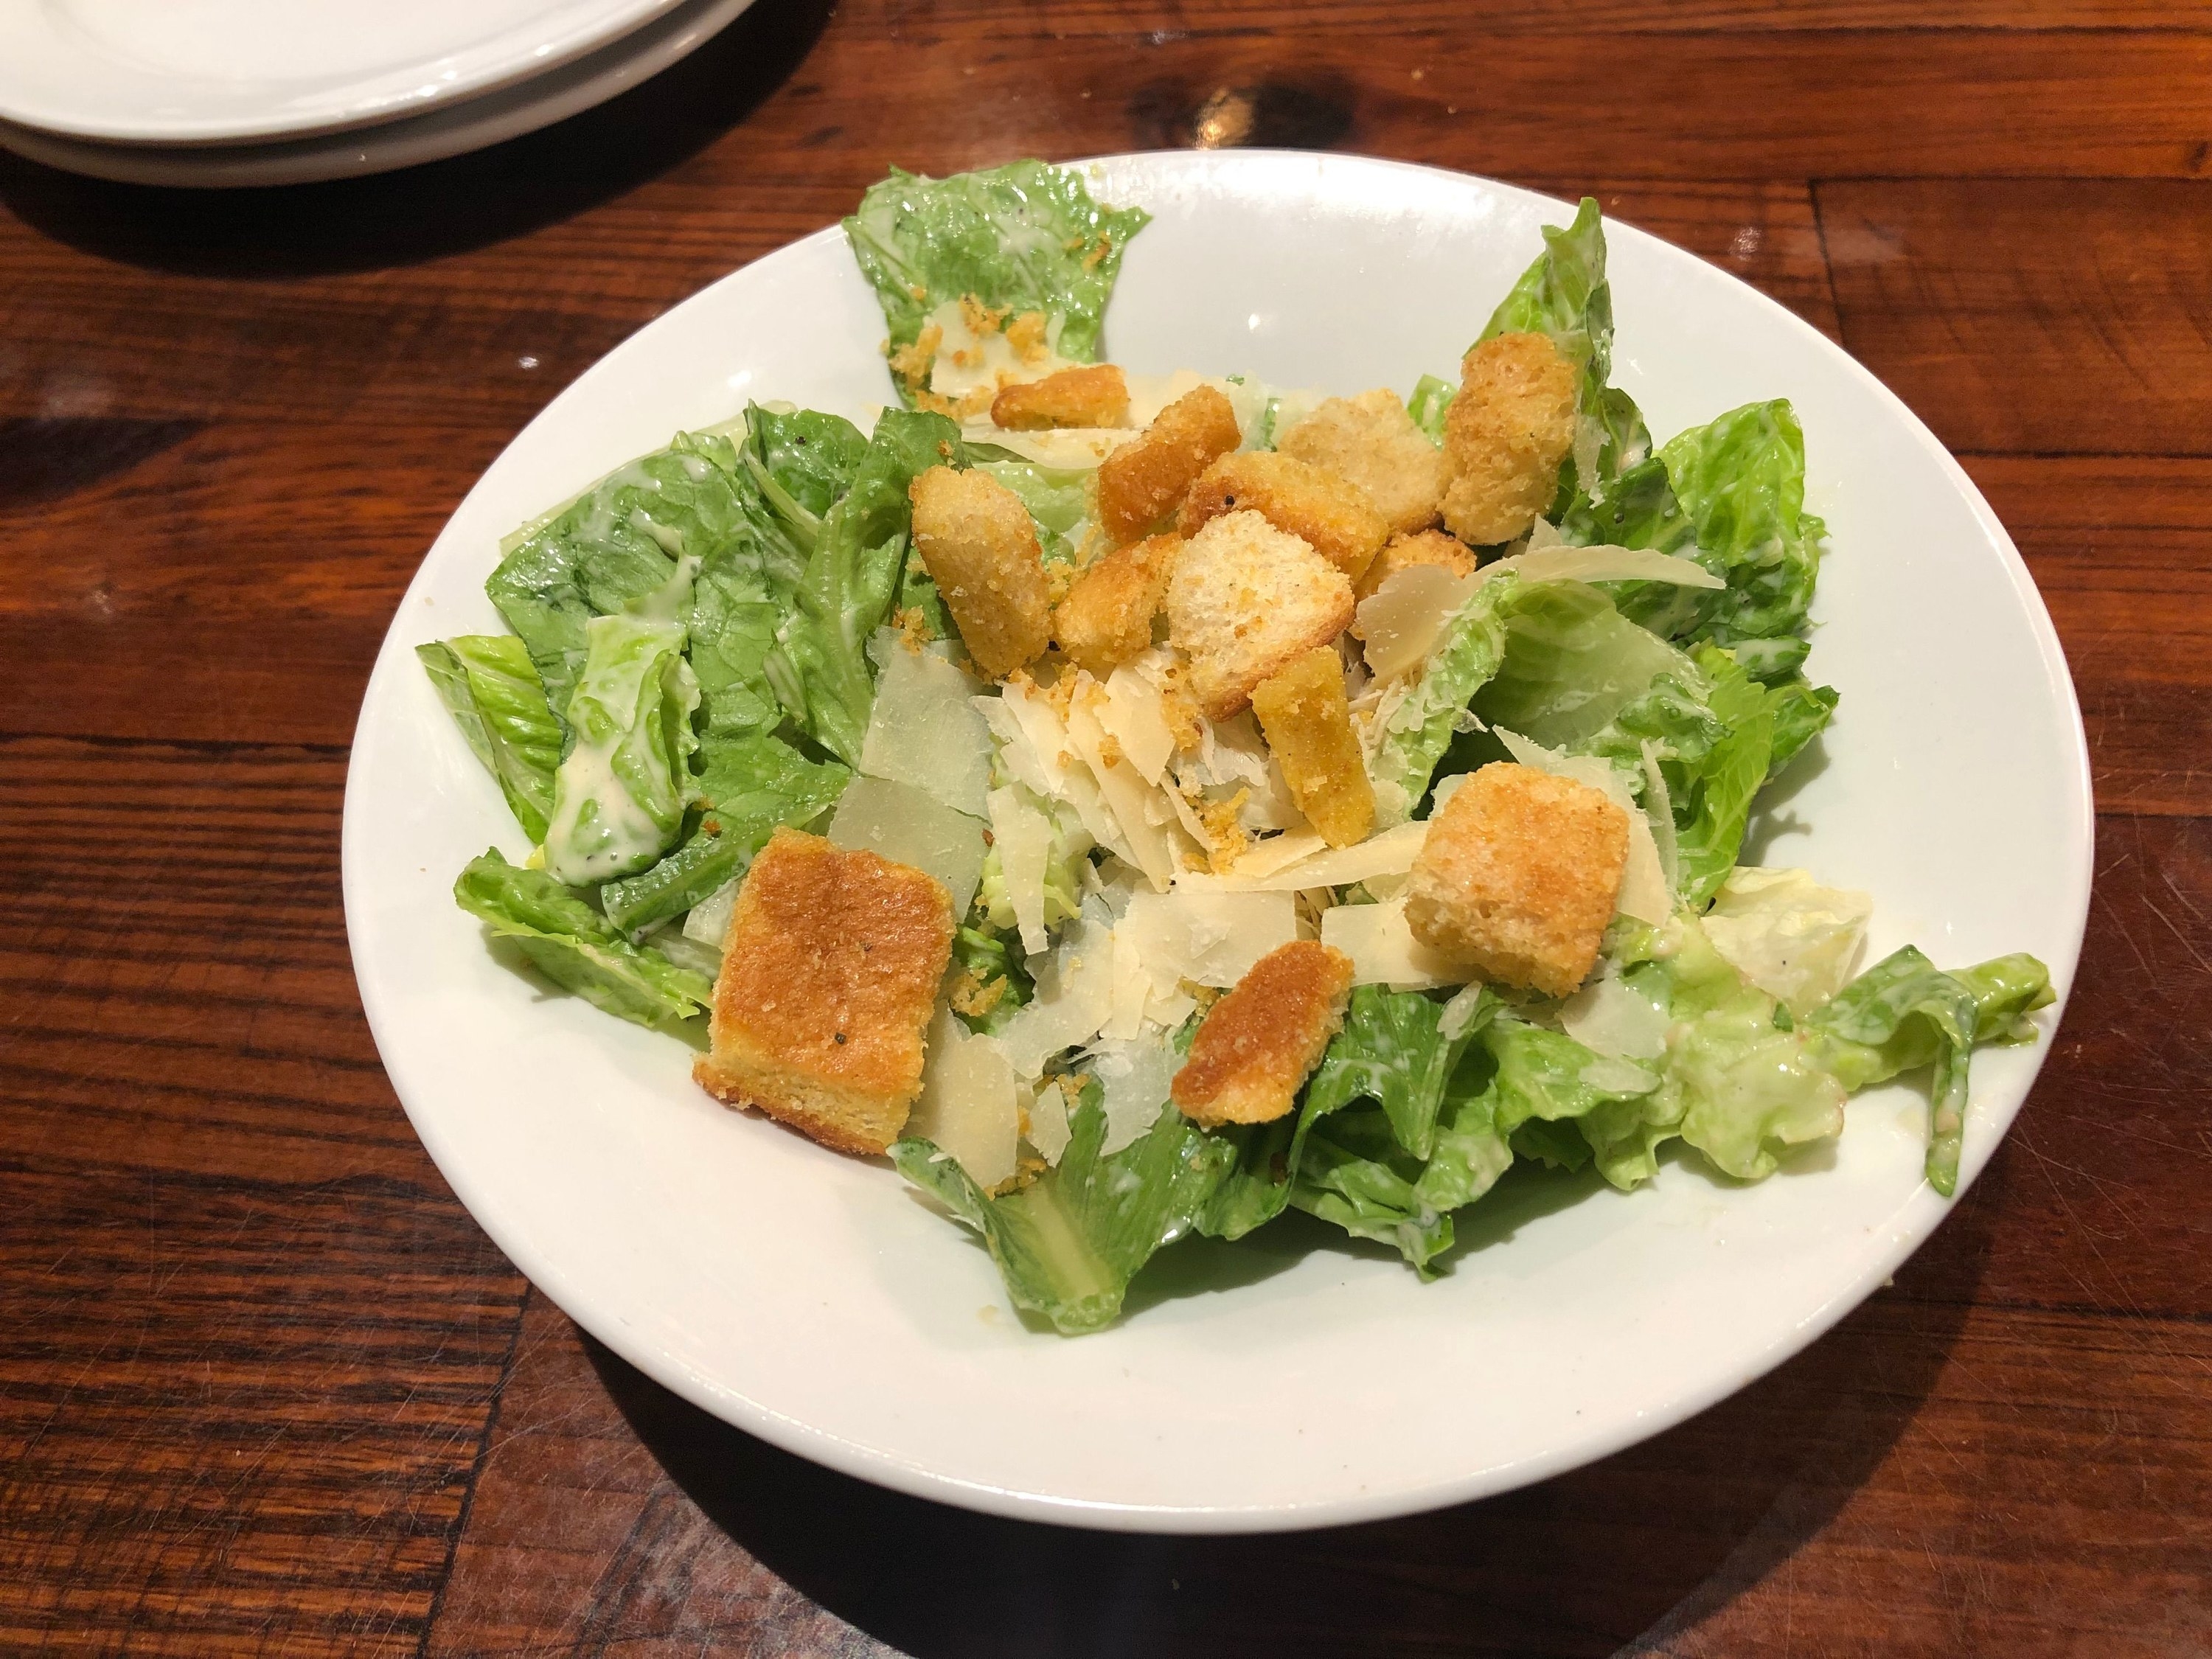 dry Caesar salad from Longhorn Steakhouse